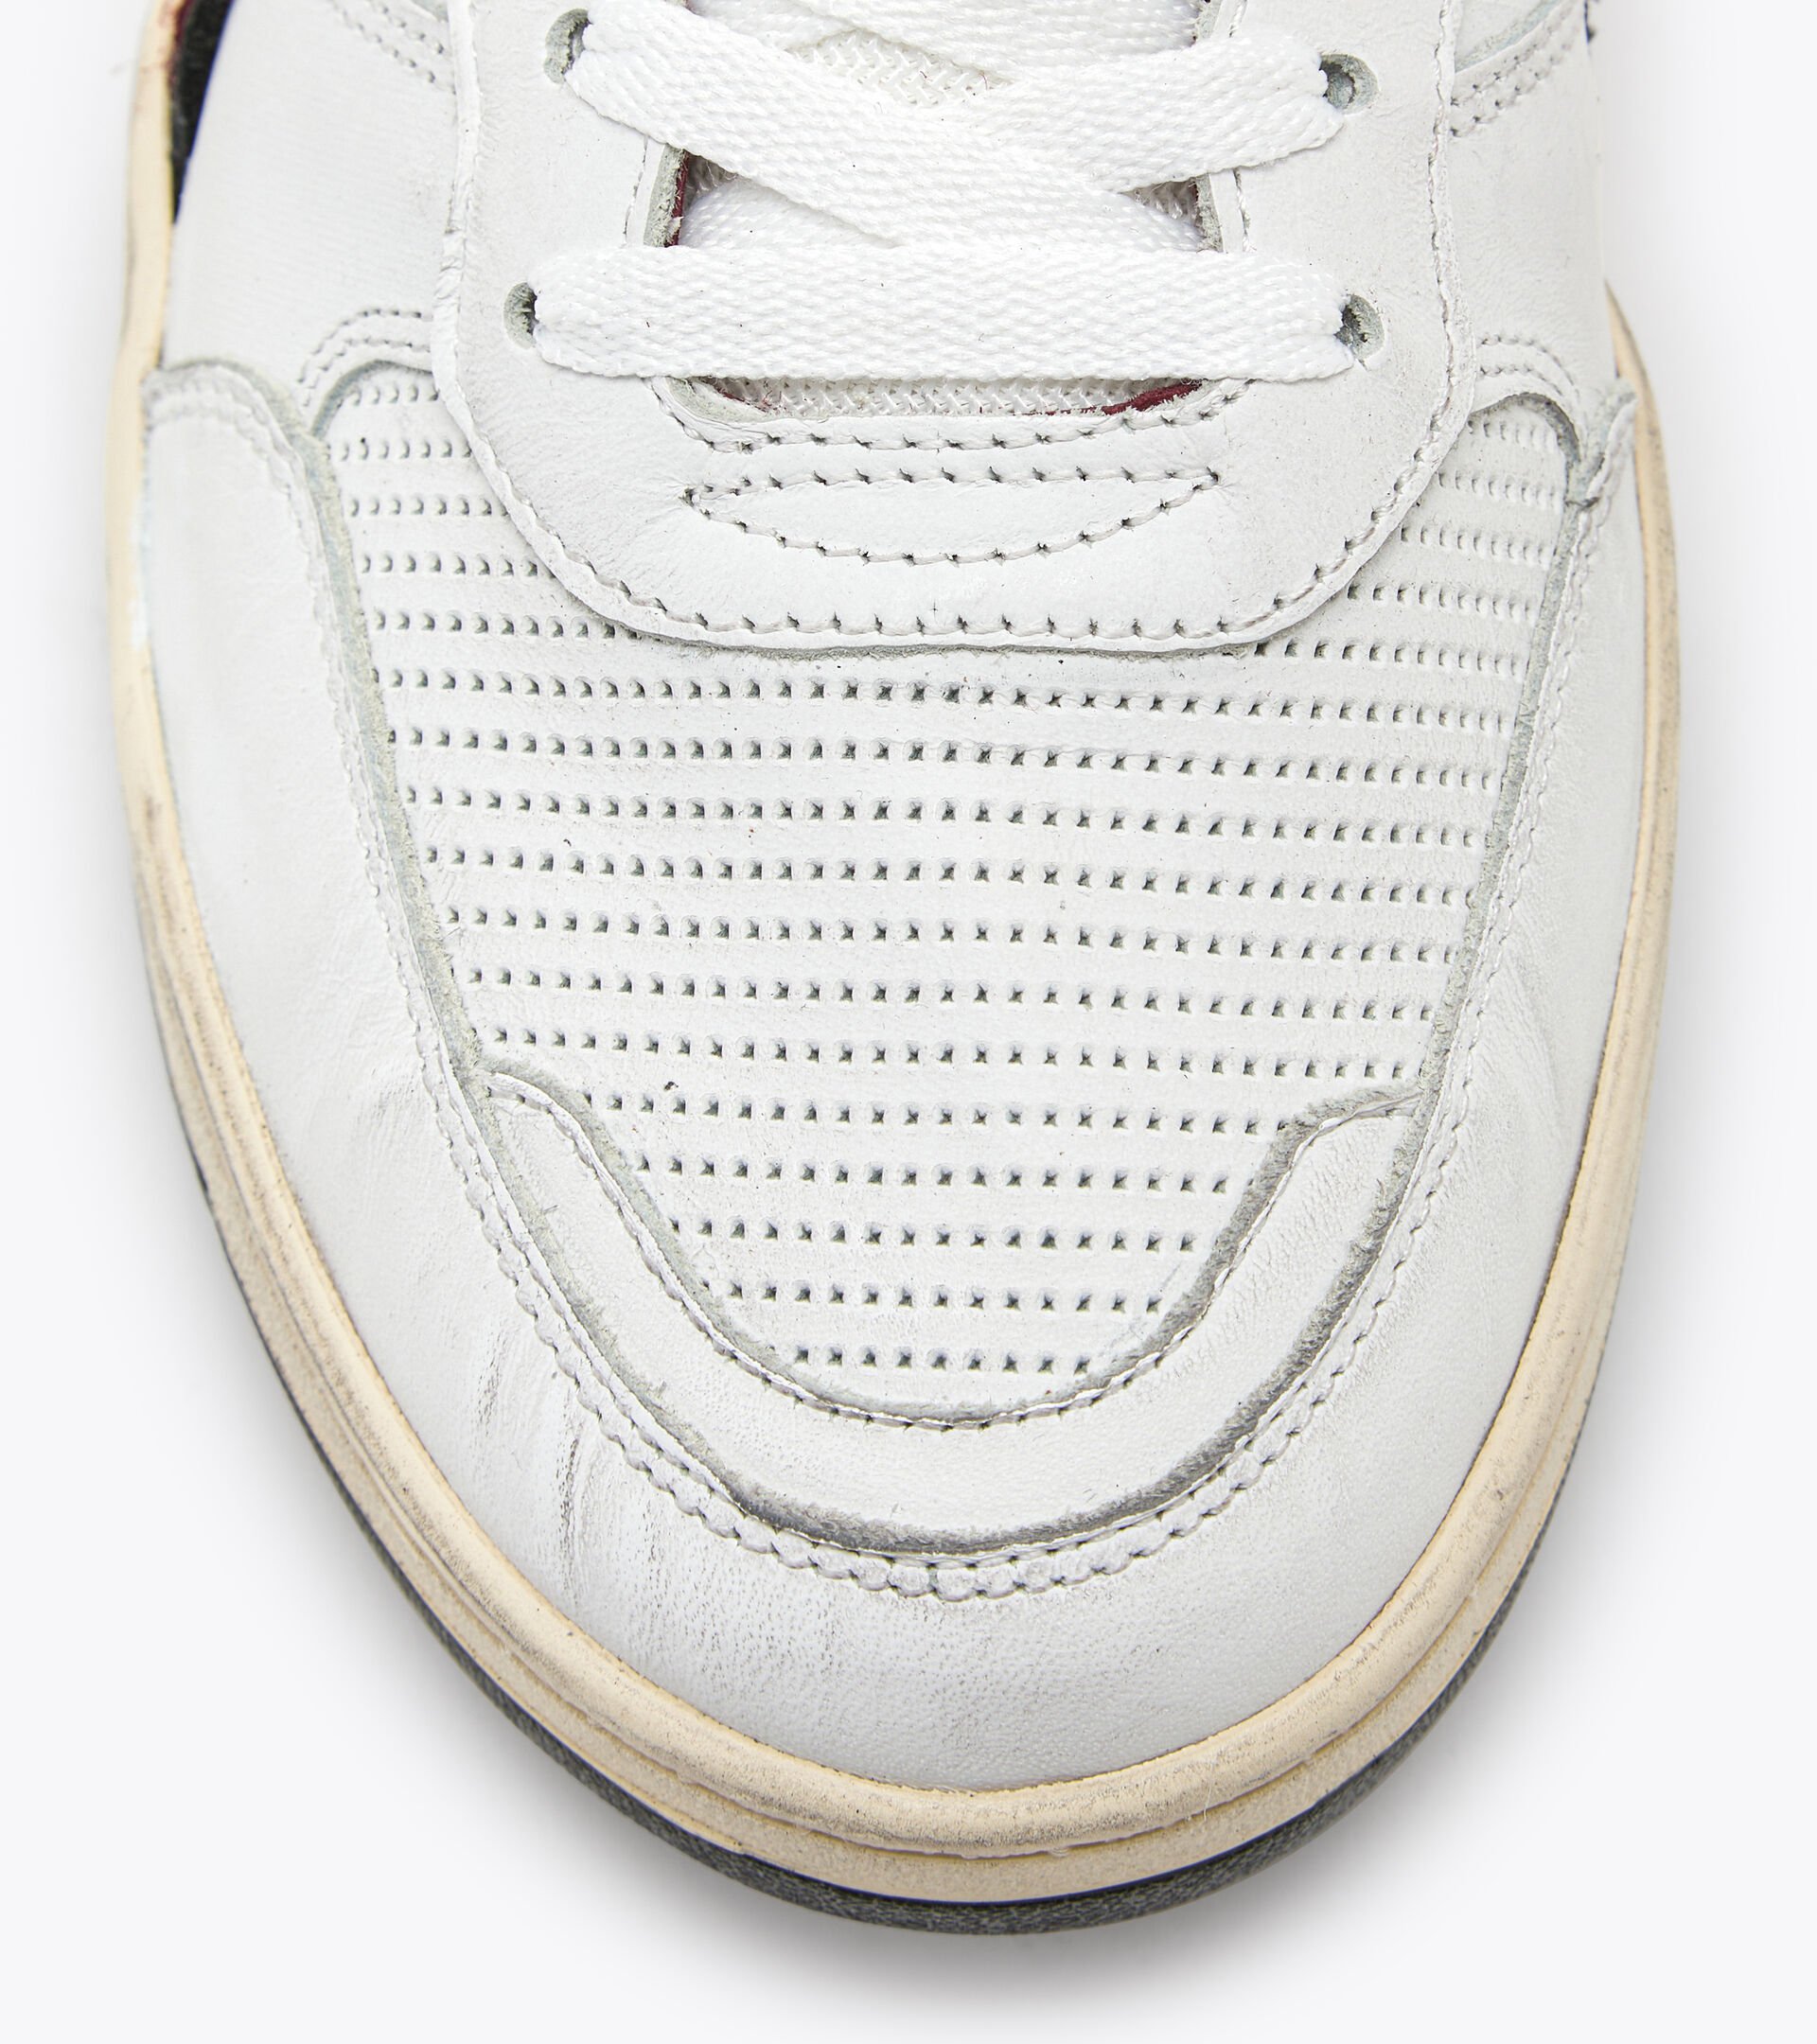 Heritage shoe - Gender Neutral B.560 USED WHITE/RUBY WINE - Diadora